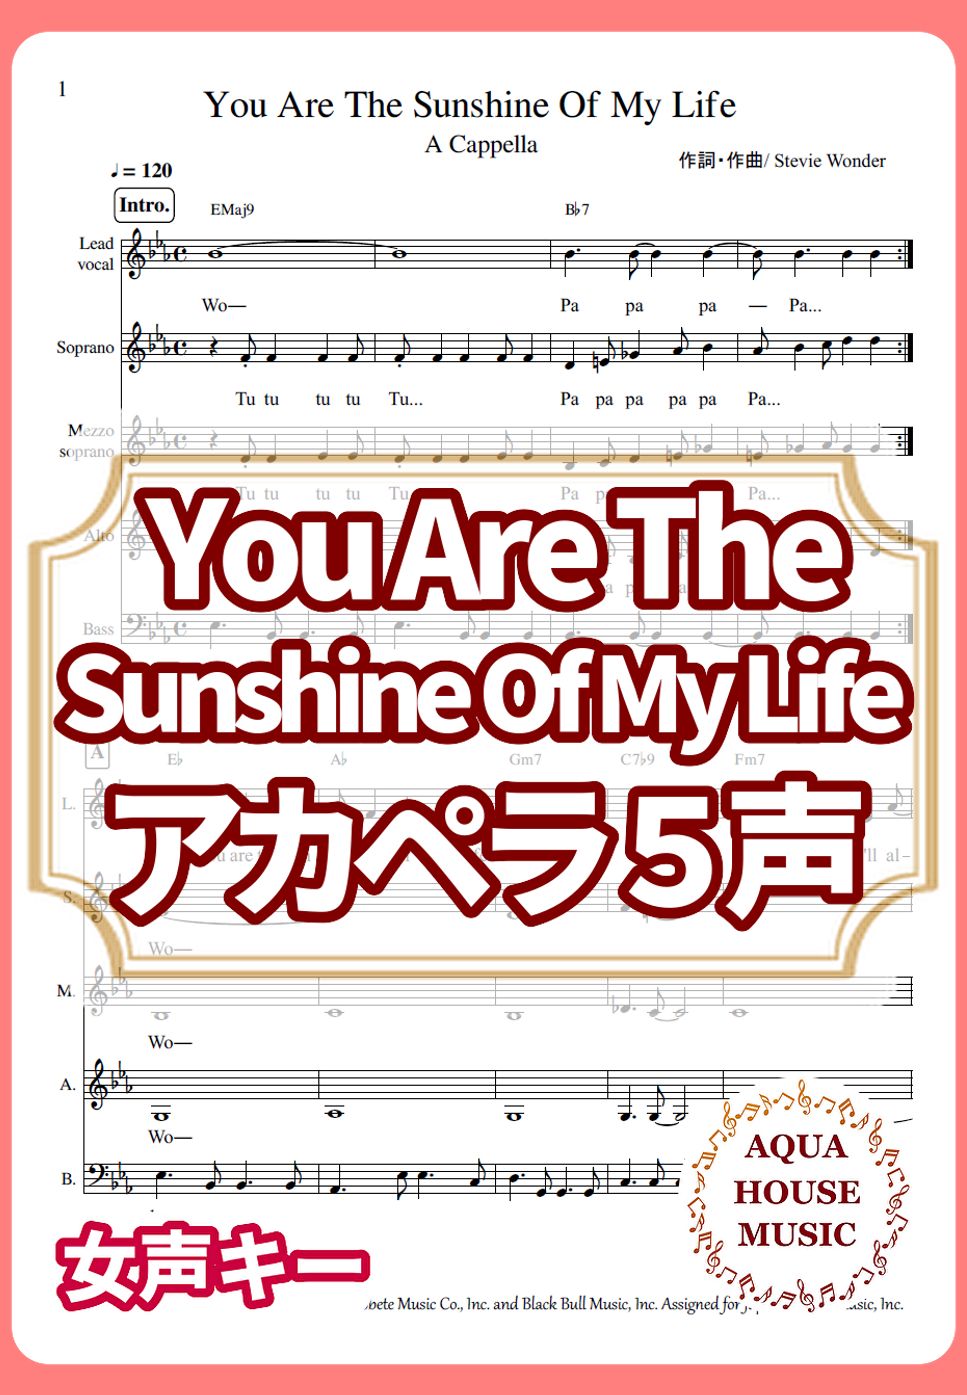 Stevie Wonder - You Are The Sunshine Of My Life (アカペラ楽譜♪5声ボイパなし) by 飯田 亜紗子